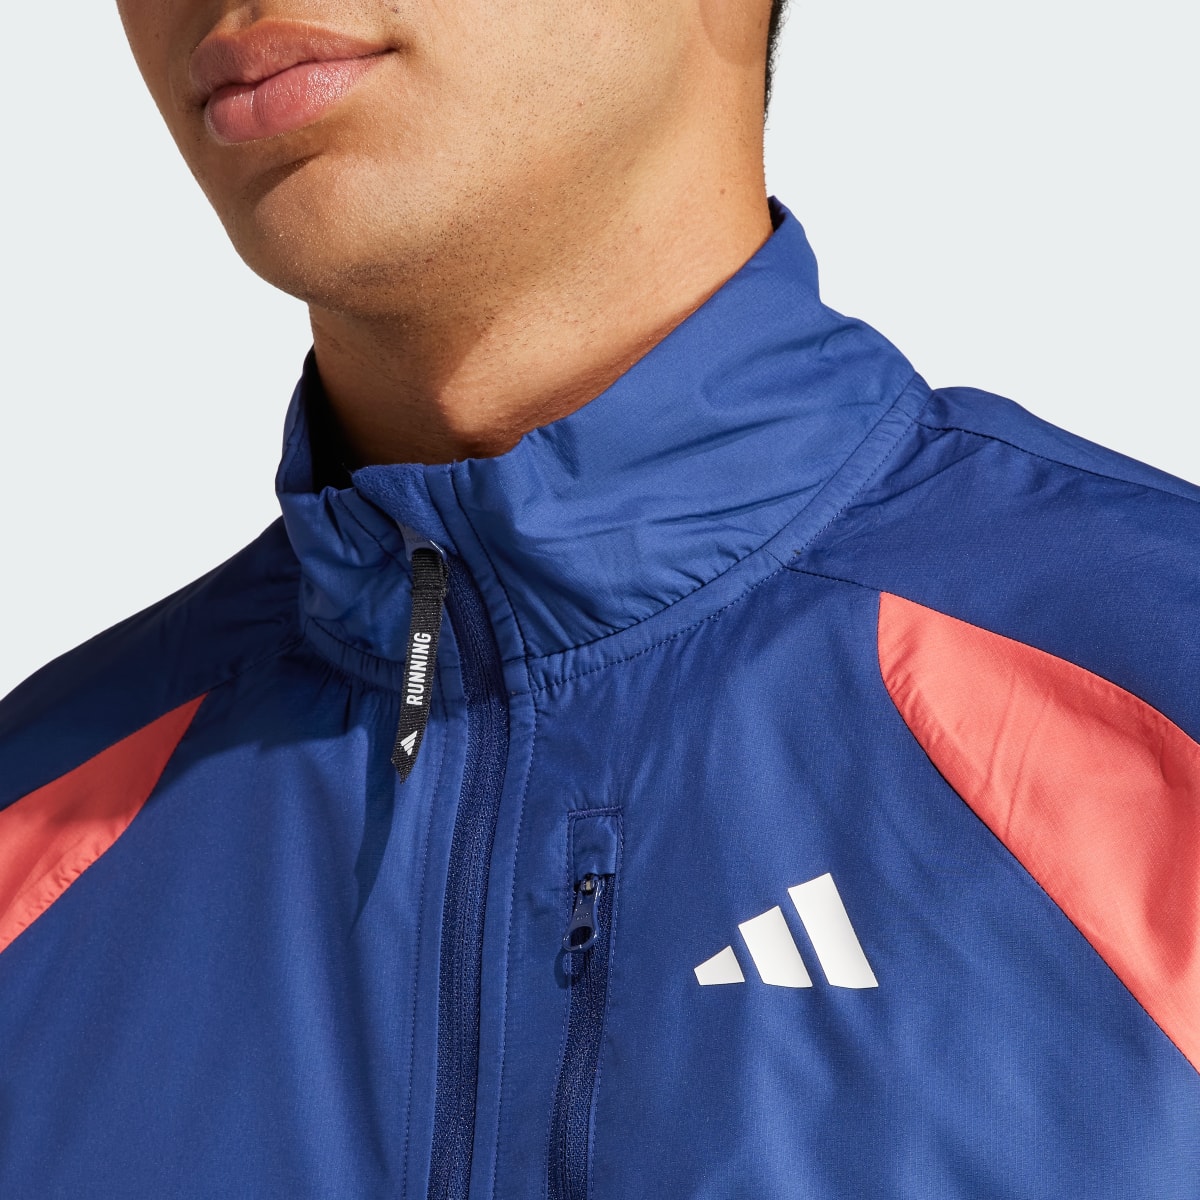 Adidas Own The Run Colorblock Jacket. 6